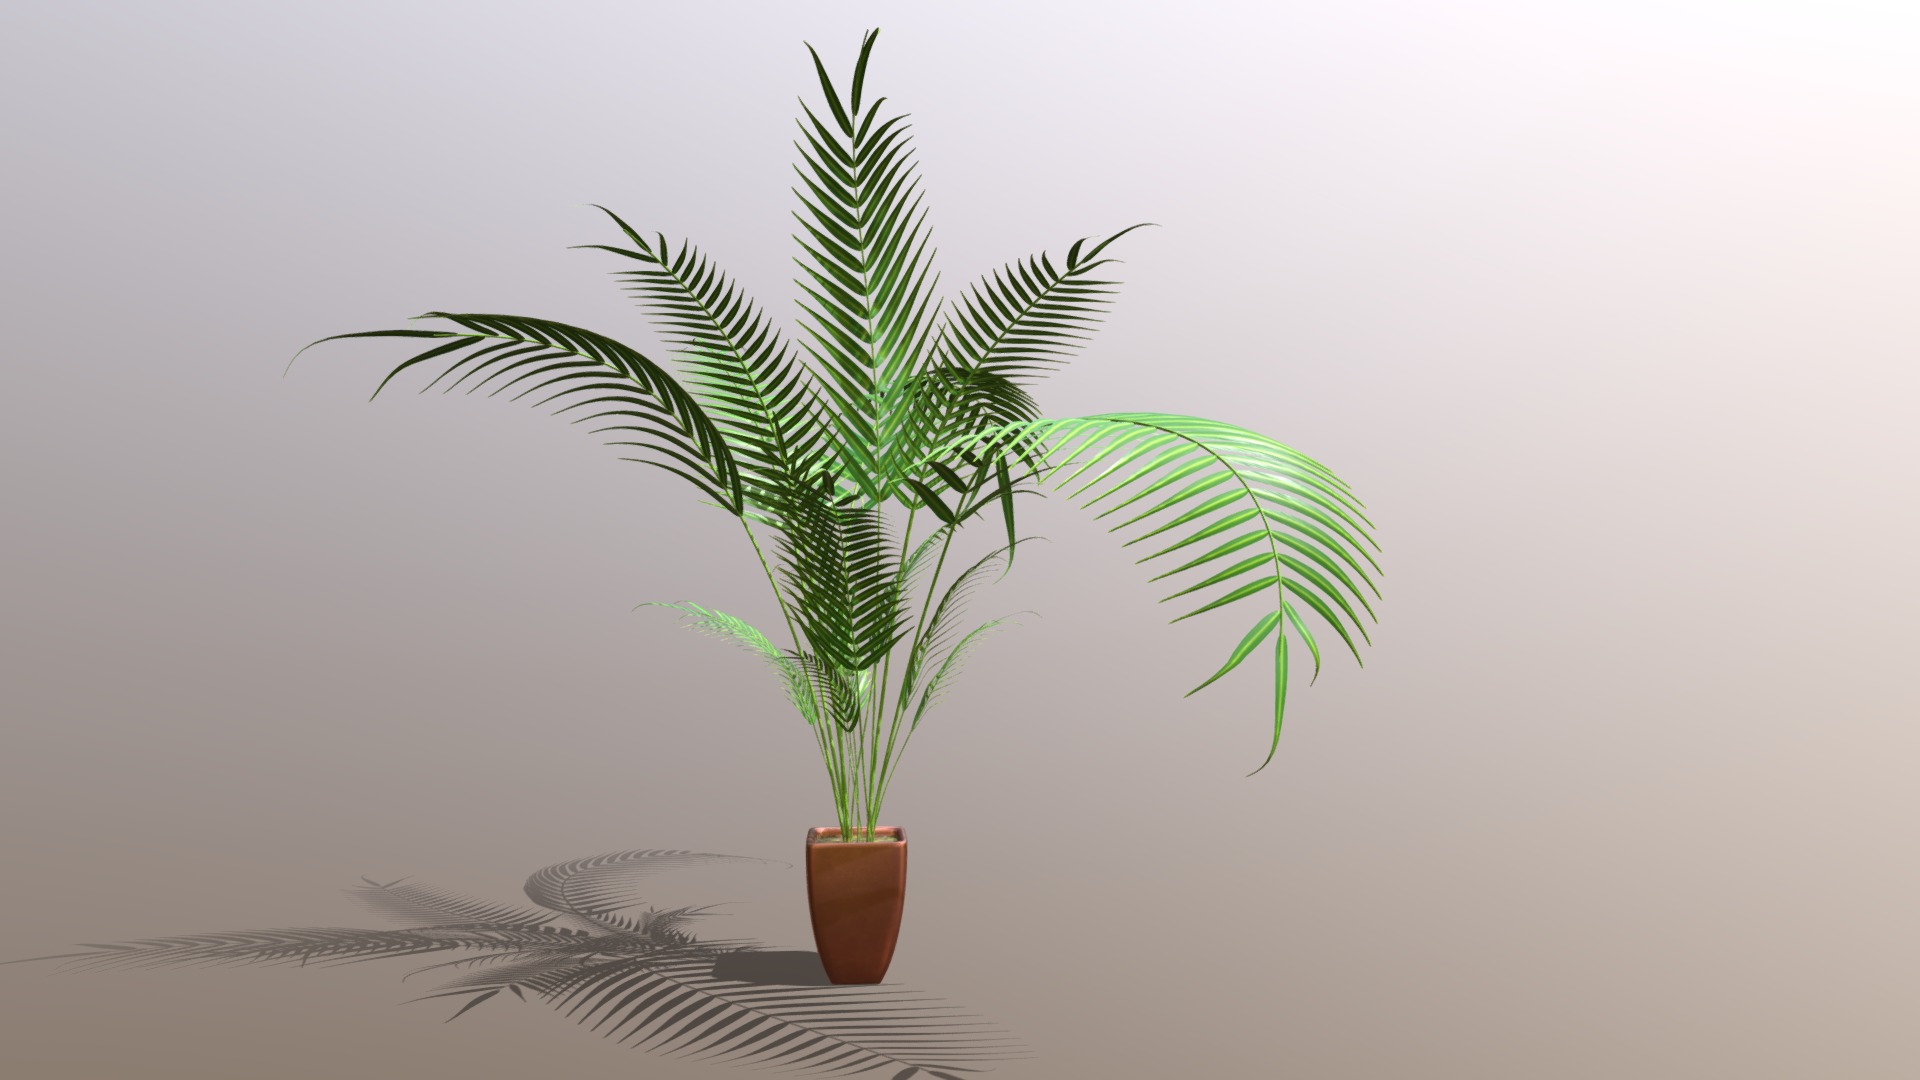 3D model Indoor plant / Kentia palm Howea forsteriana - This is a 3D model of the Indoor plant / Kentia palm Howea forsteriana. The 3D model is about a potted plant on a table.